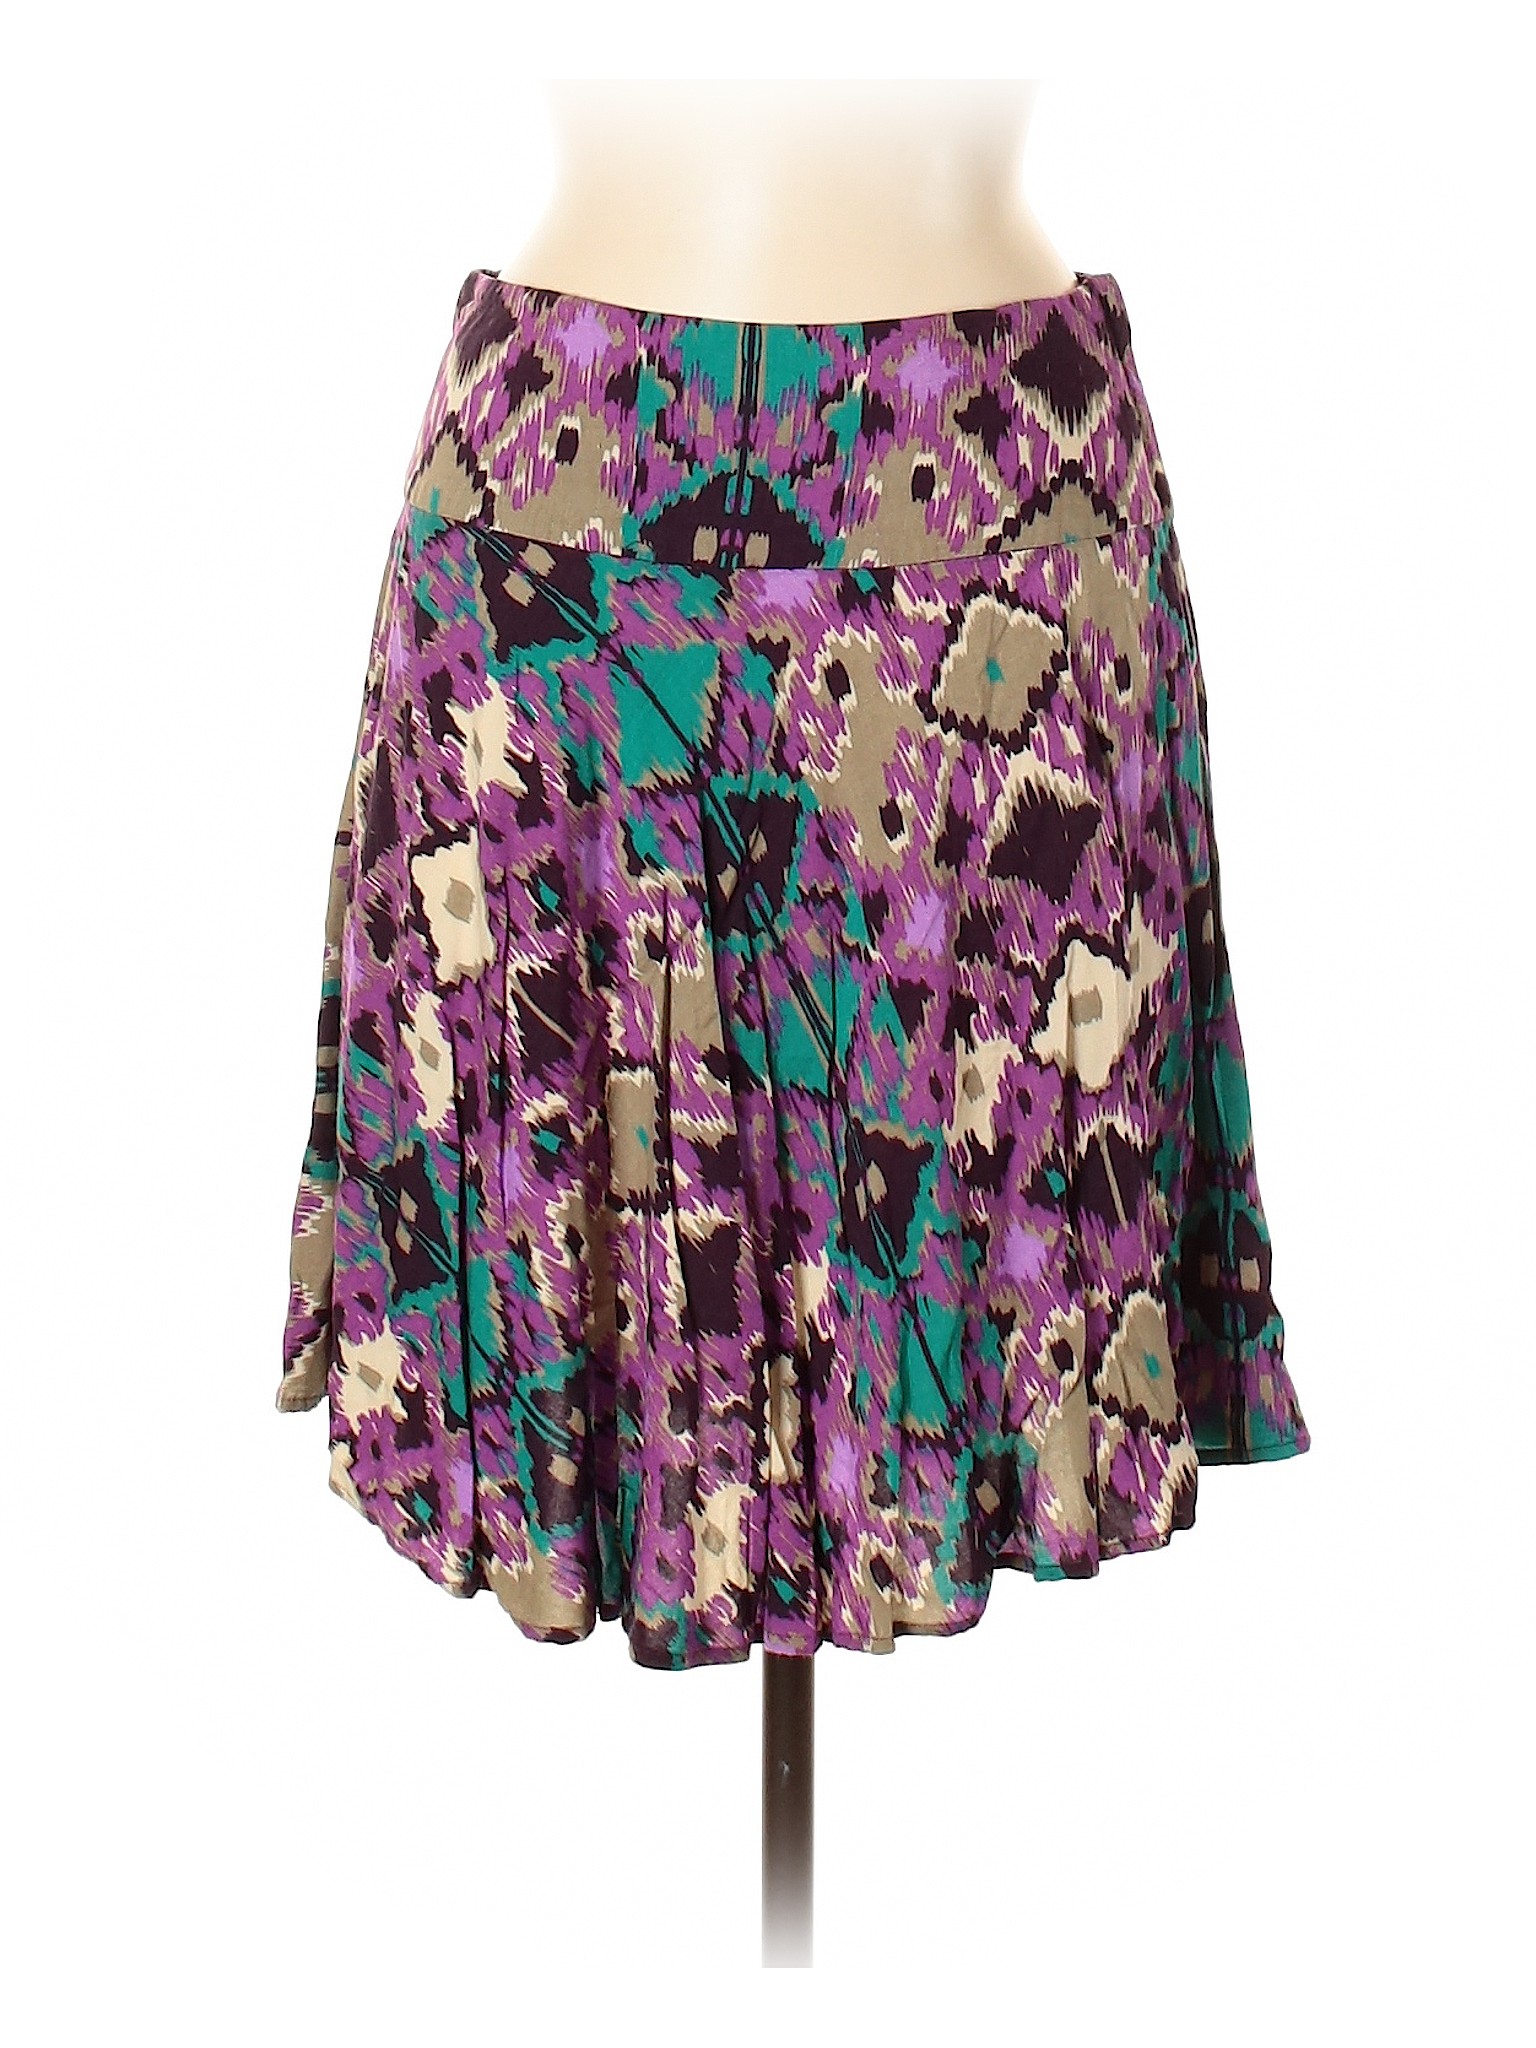 H&M Women Purple Casual Skirt 6 | eBay